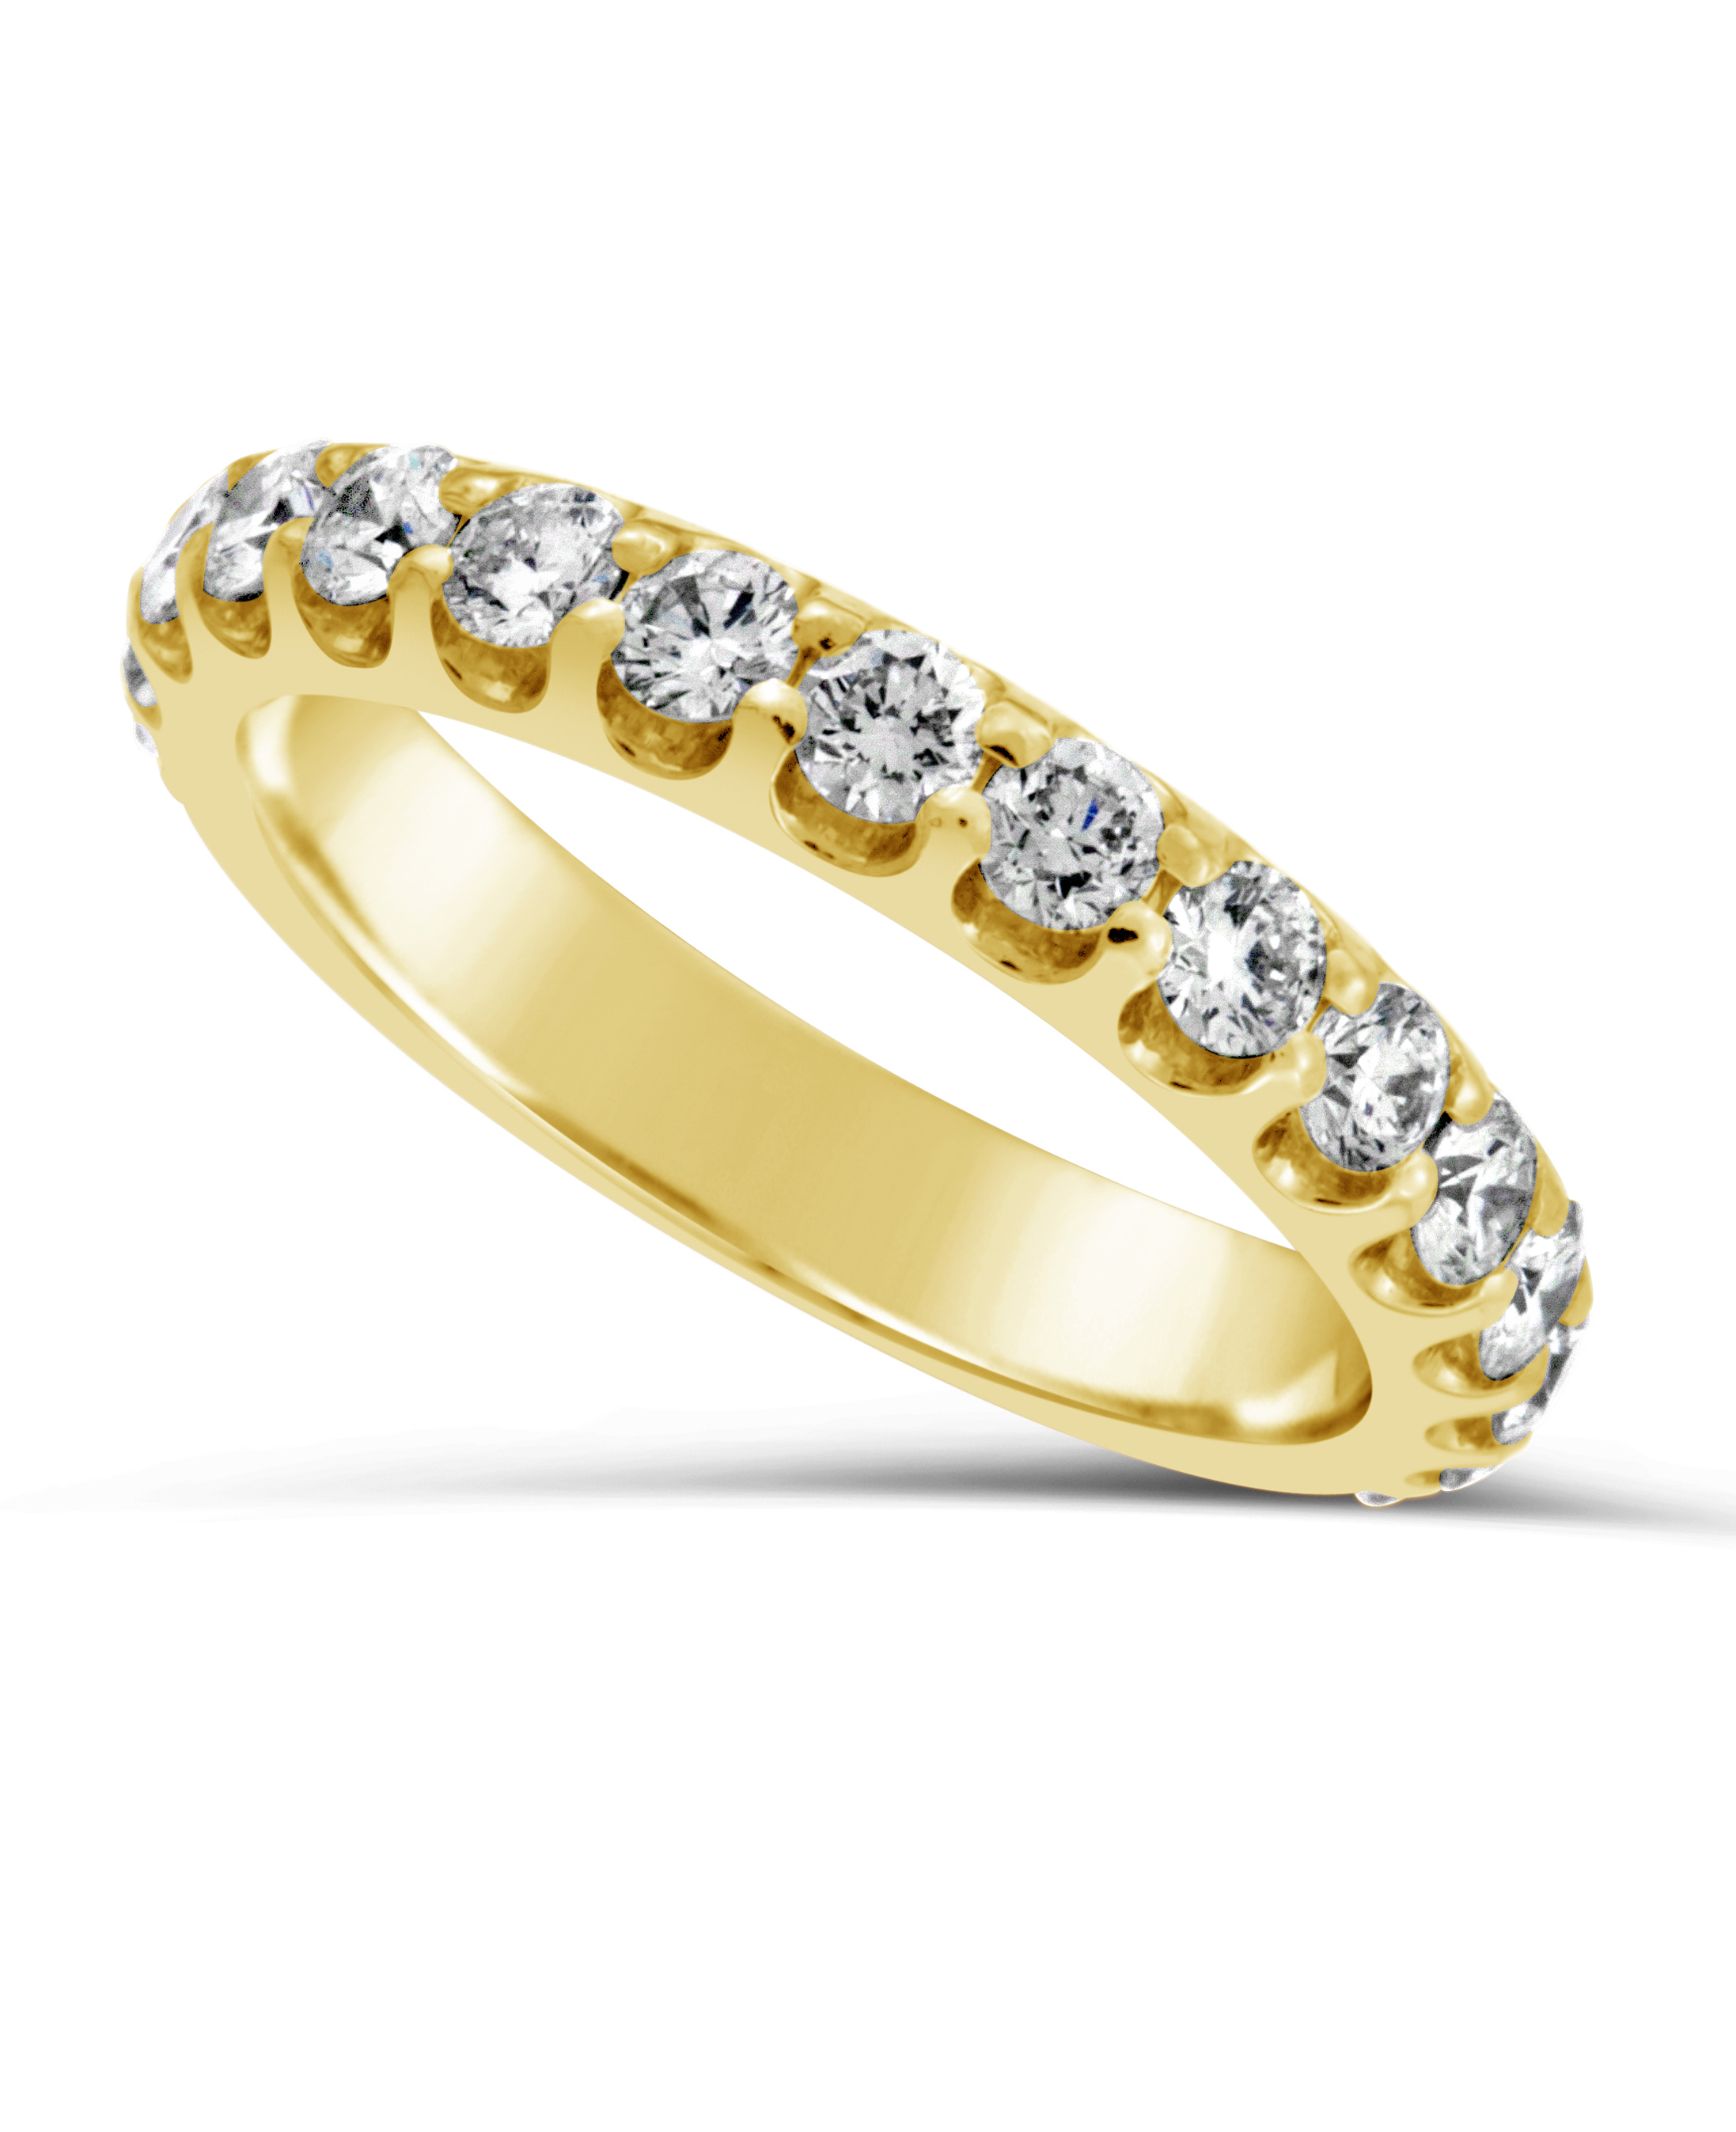 2.5 MM Pave Set Round Brilliant Cut Diamonds Half Eternity Ring in 9K Gold 